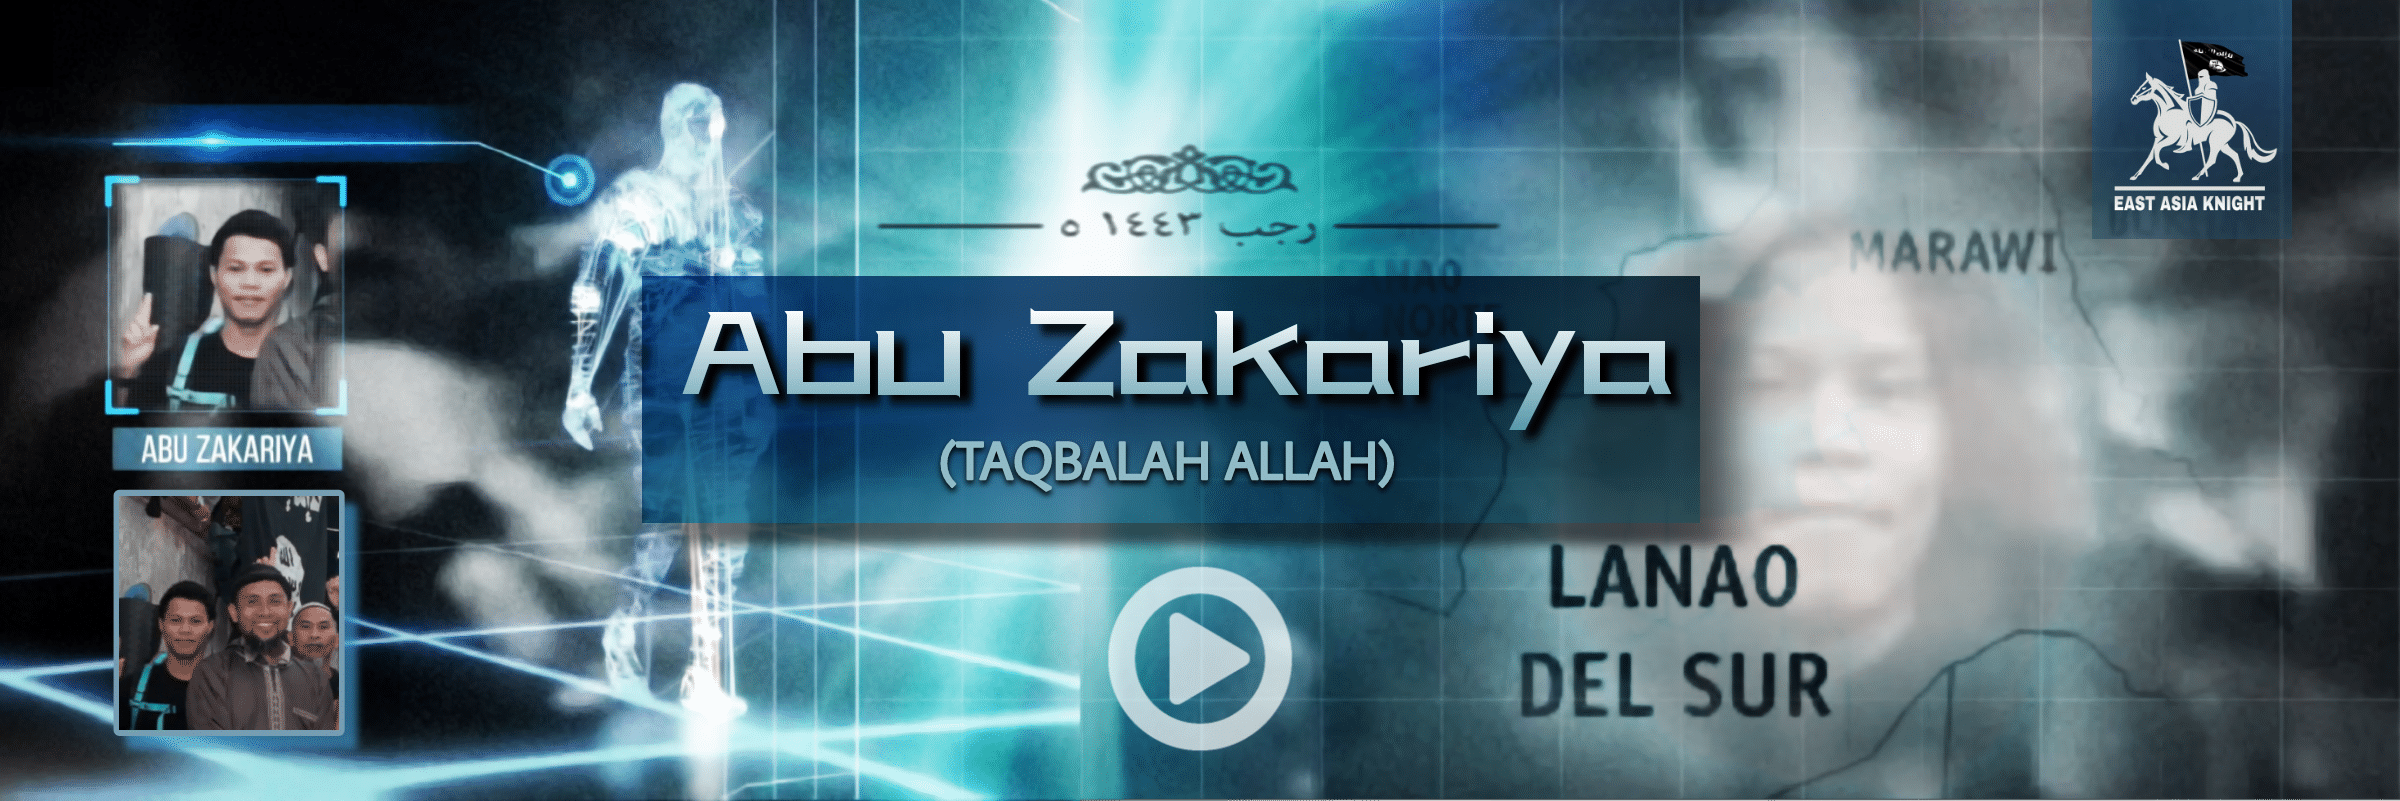 (Video) Islamic State East Asia (ISEA): "Caravan of Shuhada of Brother: Emir Abu Zakariya" - 3 December 2022